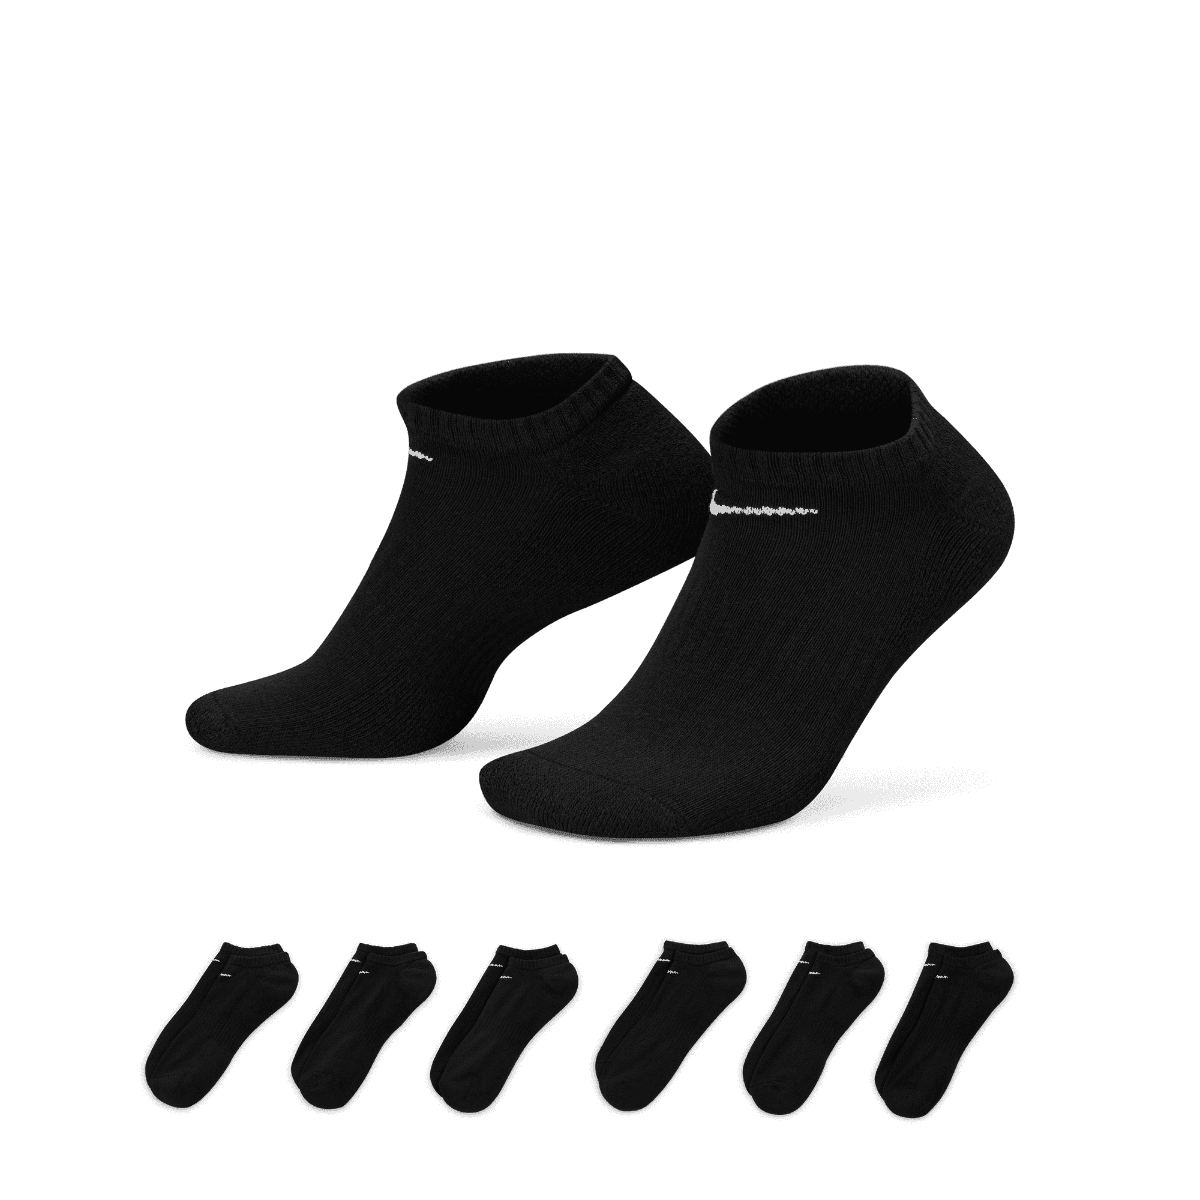 Nike Men's Cotton No Show 6 Pack Socks Black Size Large - Walmart.com